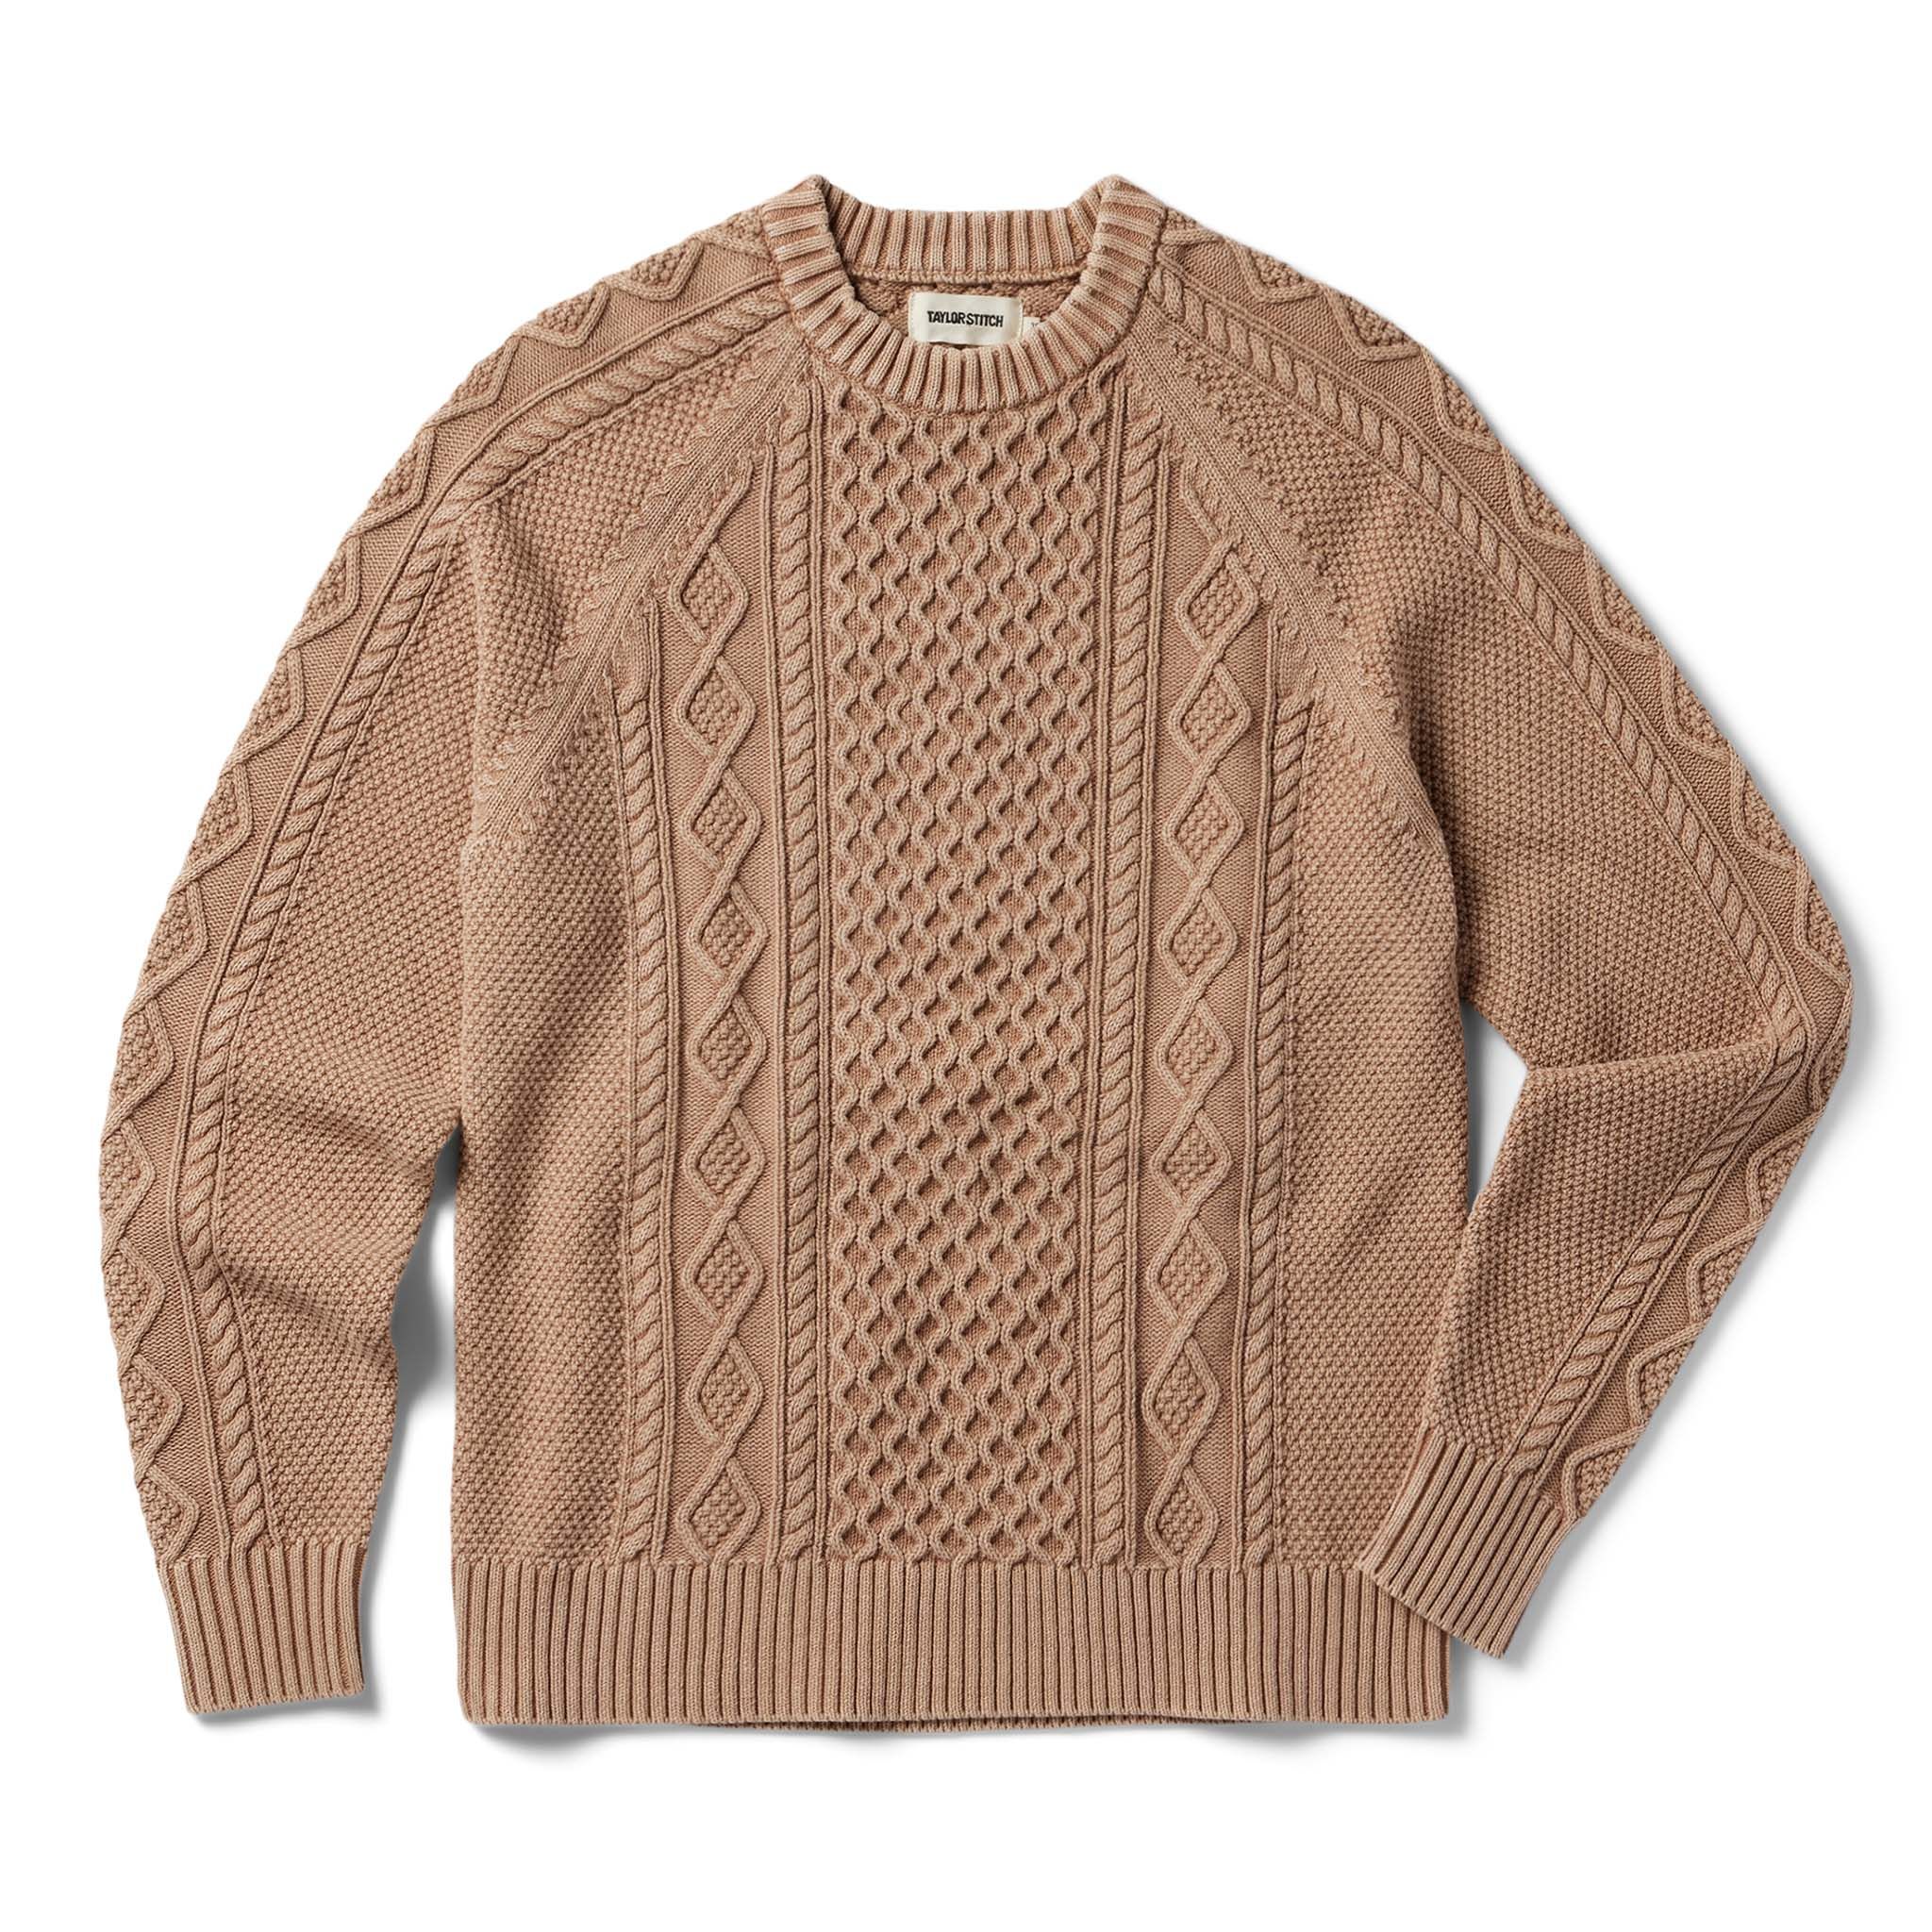 18 Best Men's Cable Knit Sweaters